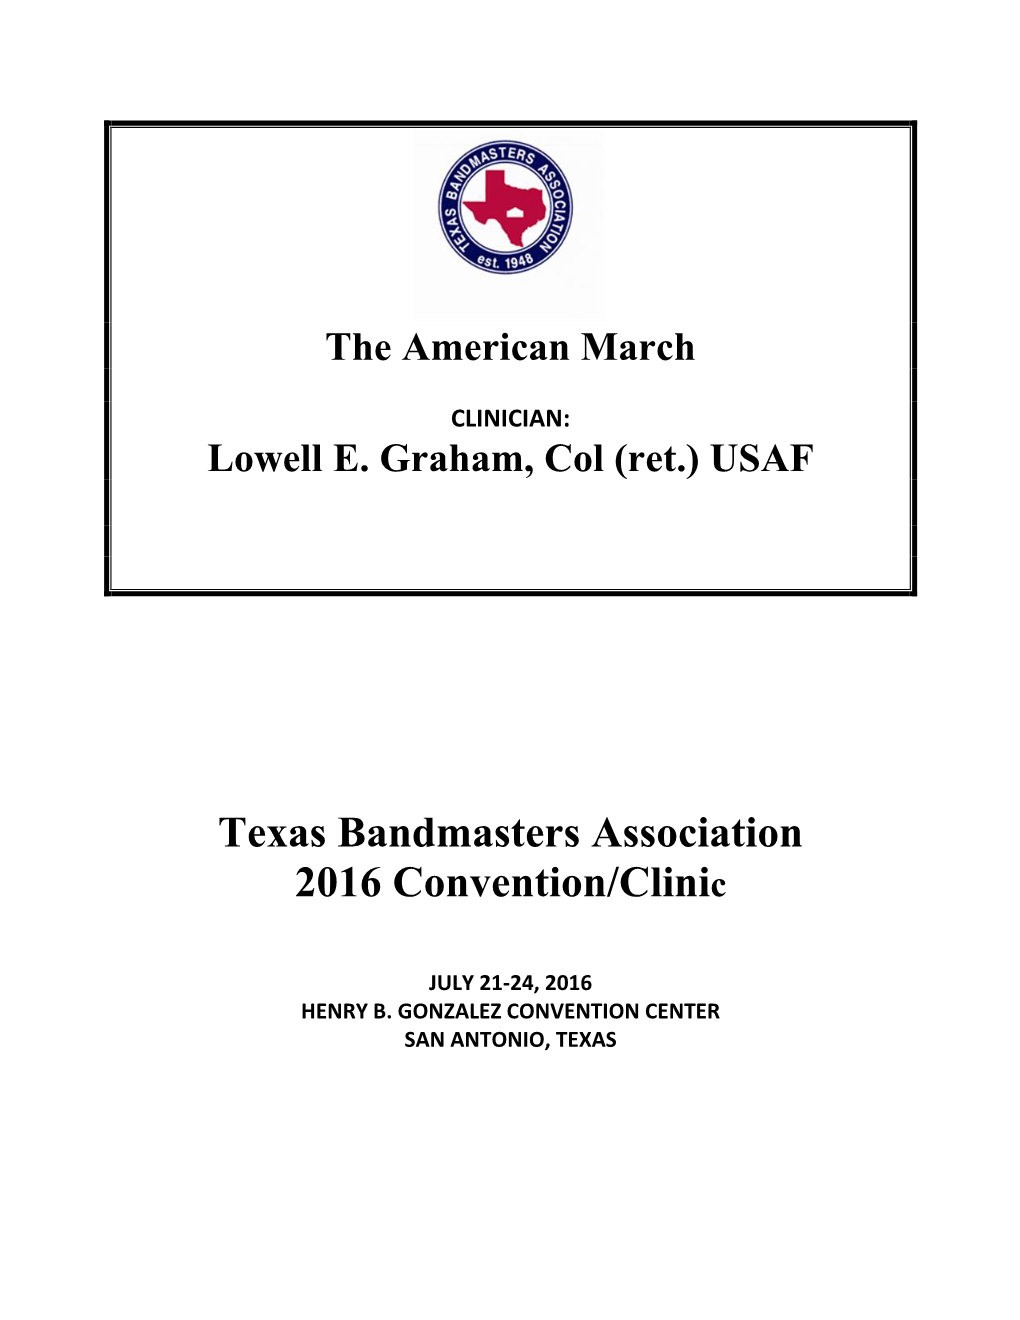 Texas Bandmasters Association 2016 Convention/Clinic